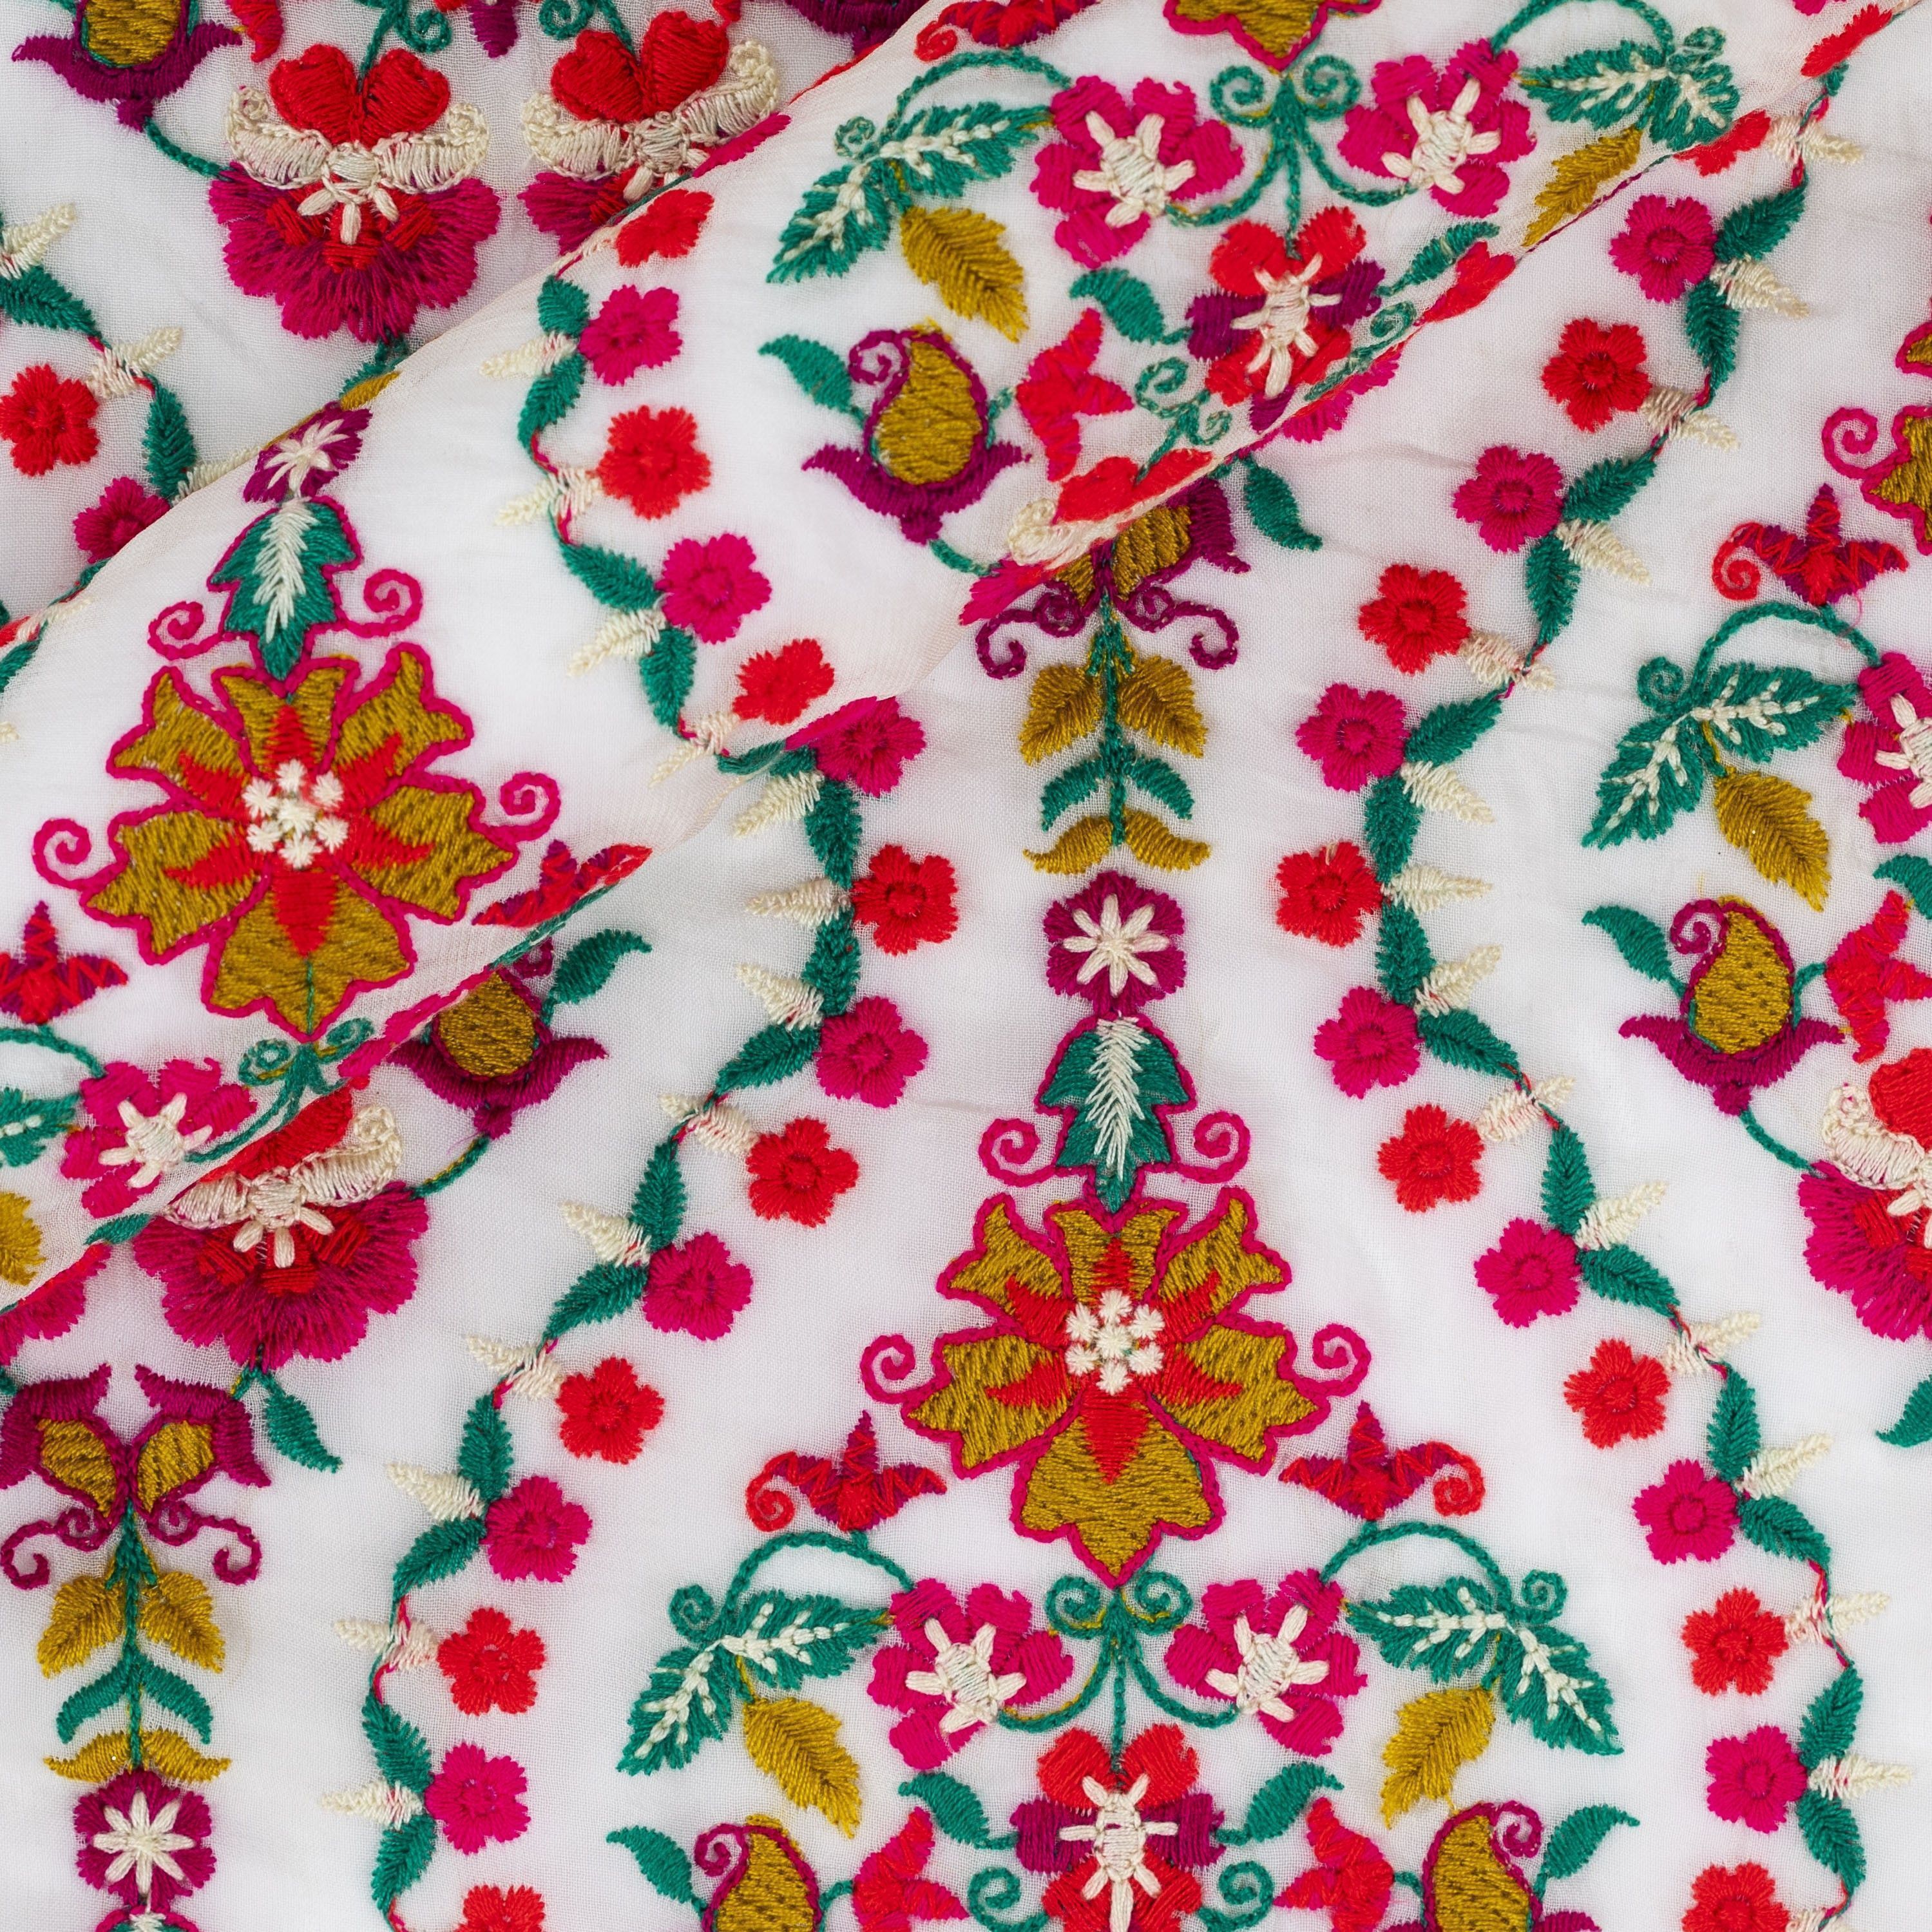 Floral embroidery on cotton - Ungaro Première SS 2020 - U64565